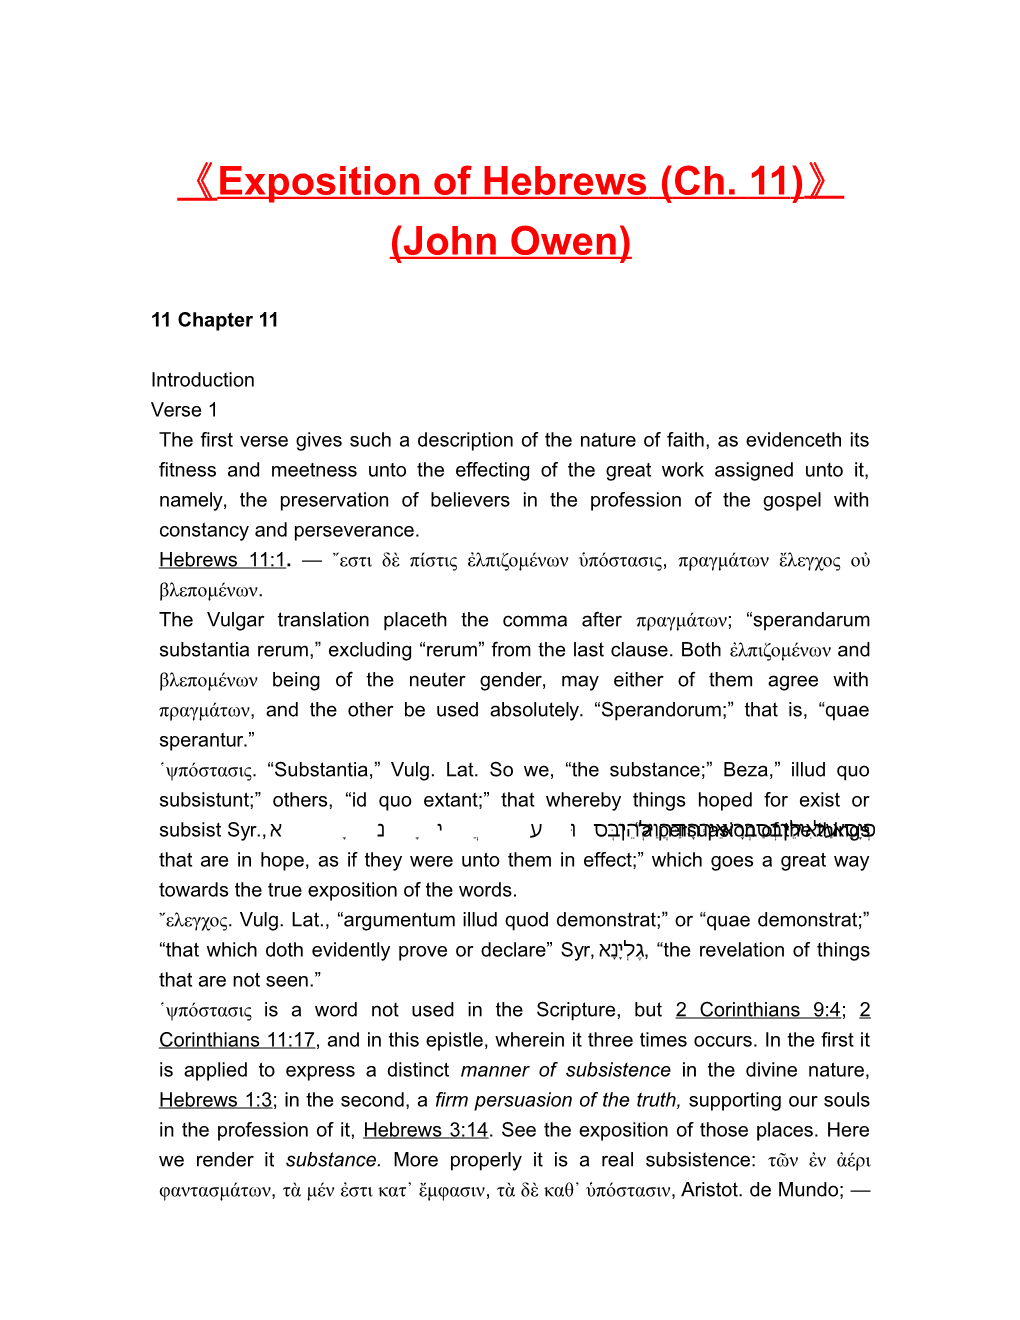 Exposition of Hebrews (Ch. 11) (John Owen)